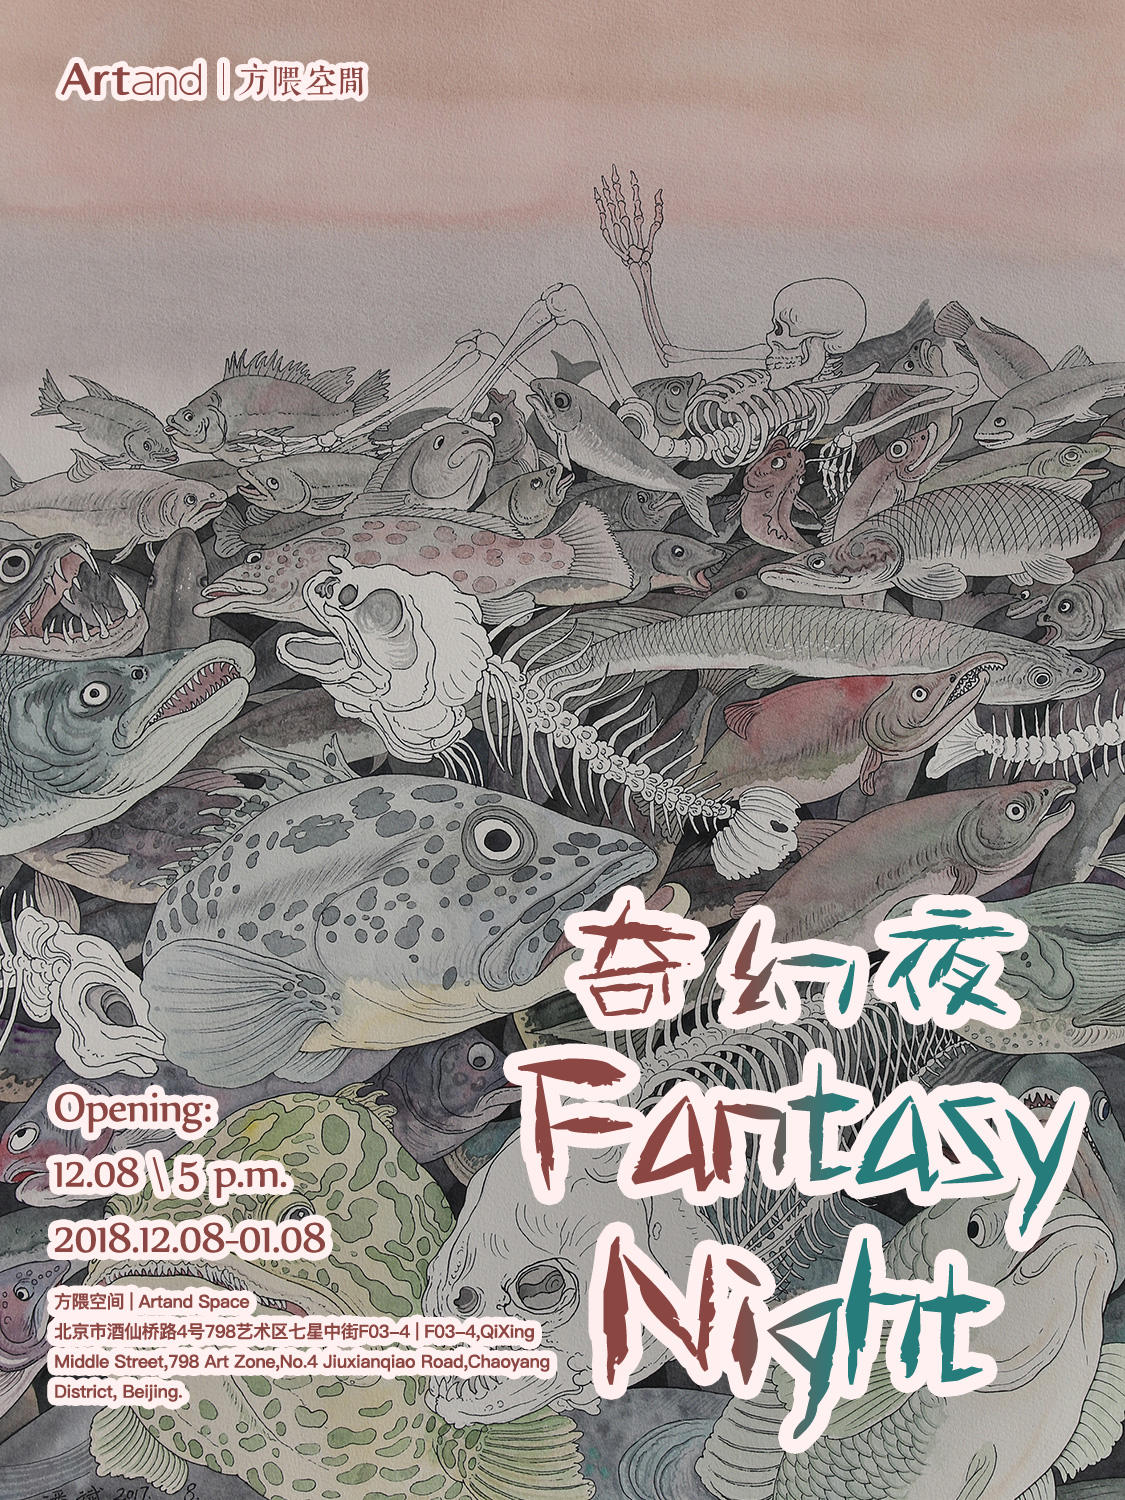 展讯 | 奇幻夜“Fantasy Night”将于本周六8号开幕